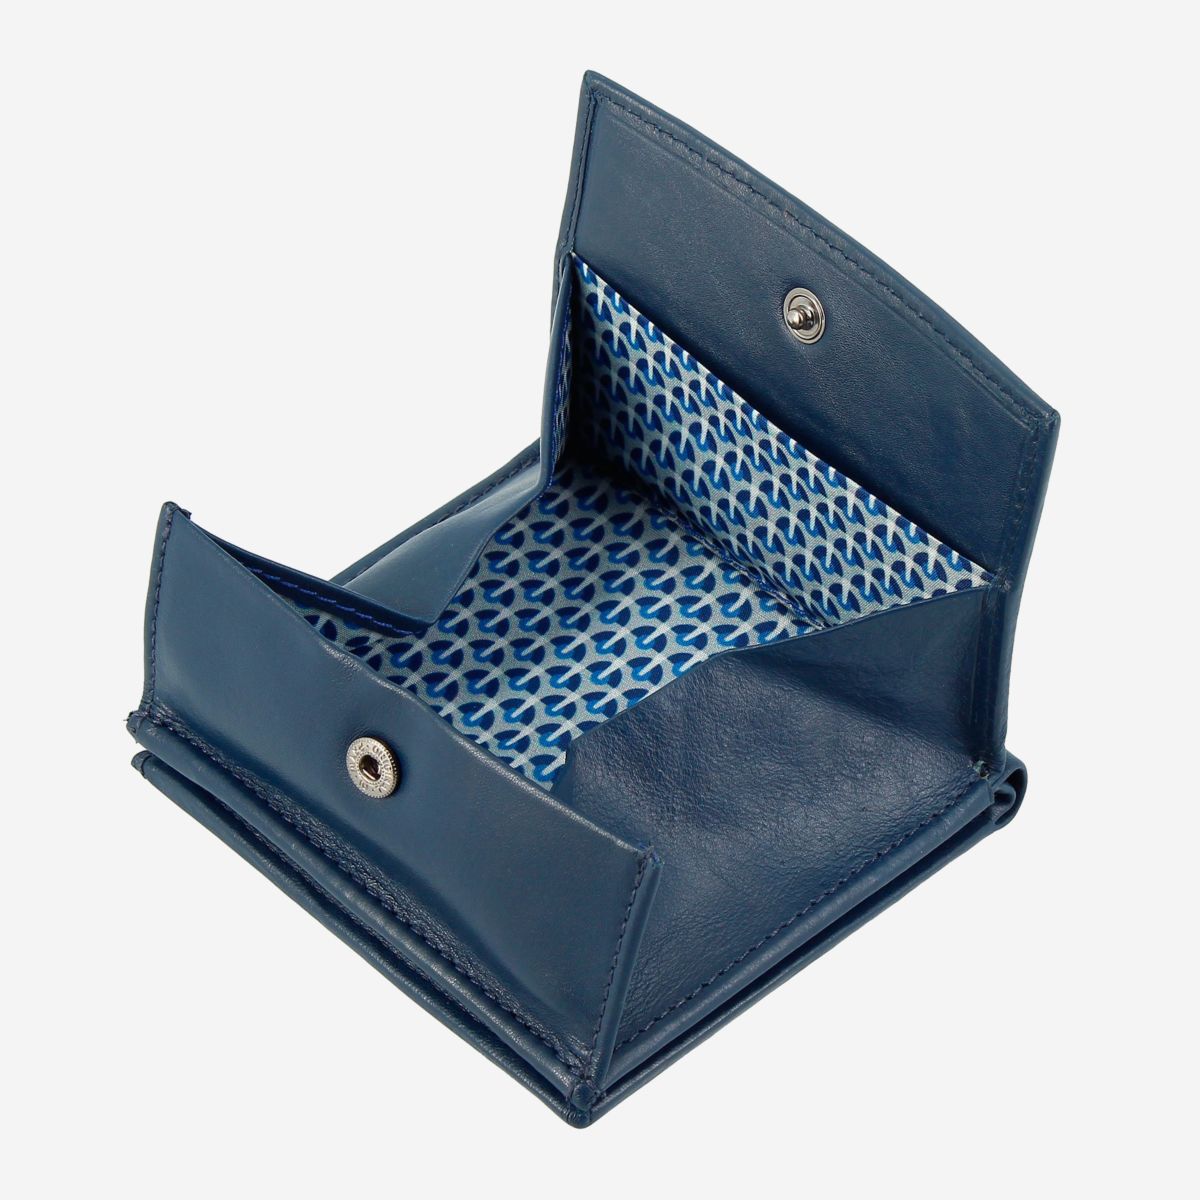 NUVOLA PELLE Small Unique Leather Wallet  - Blue